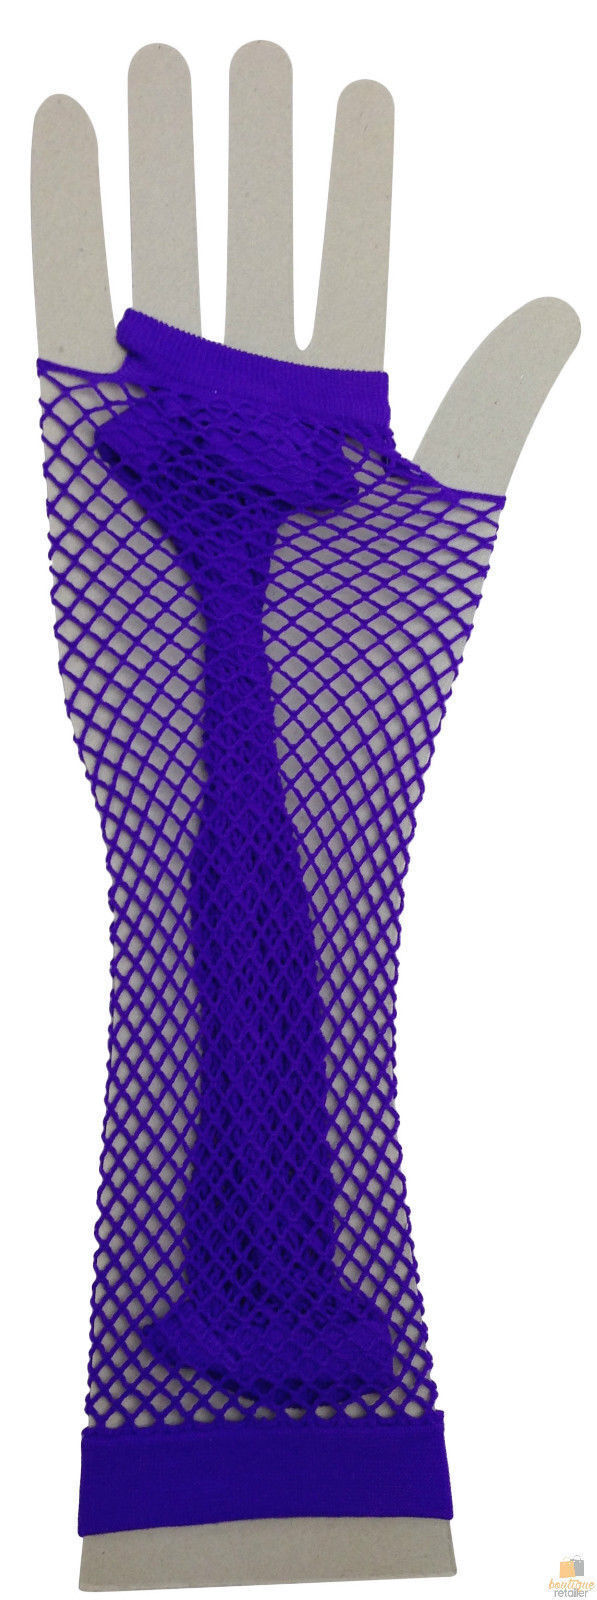 FISHNET GLOVES Fingerless Elbow Length 70s 80s Womens Costume Party Dance - Purple - One Size